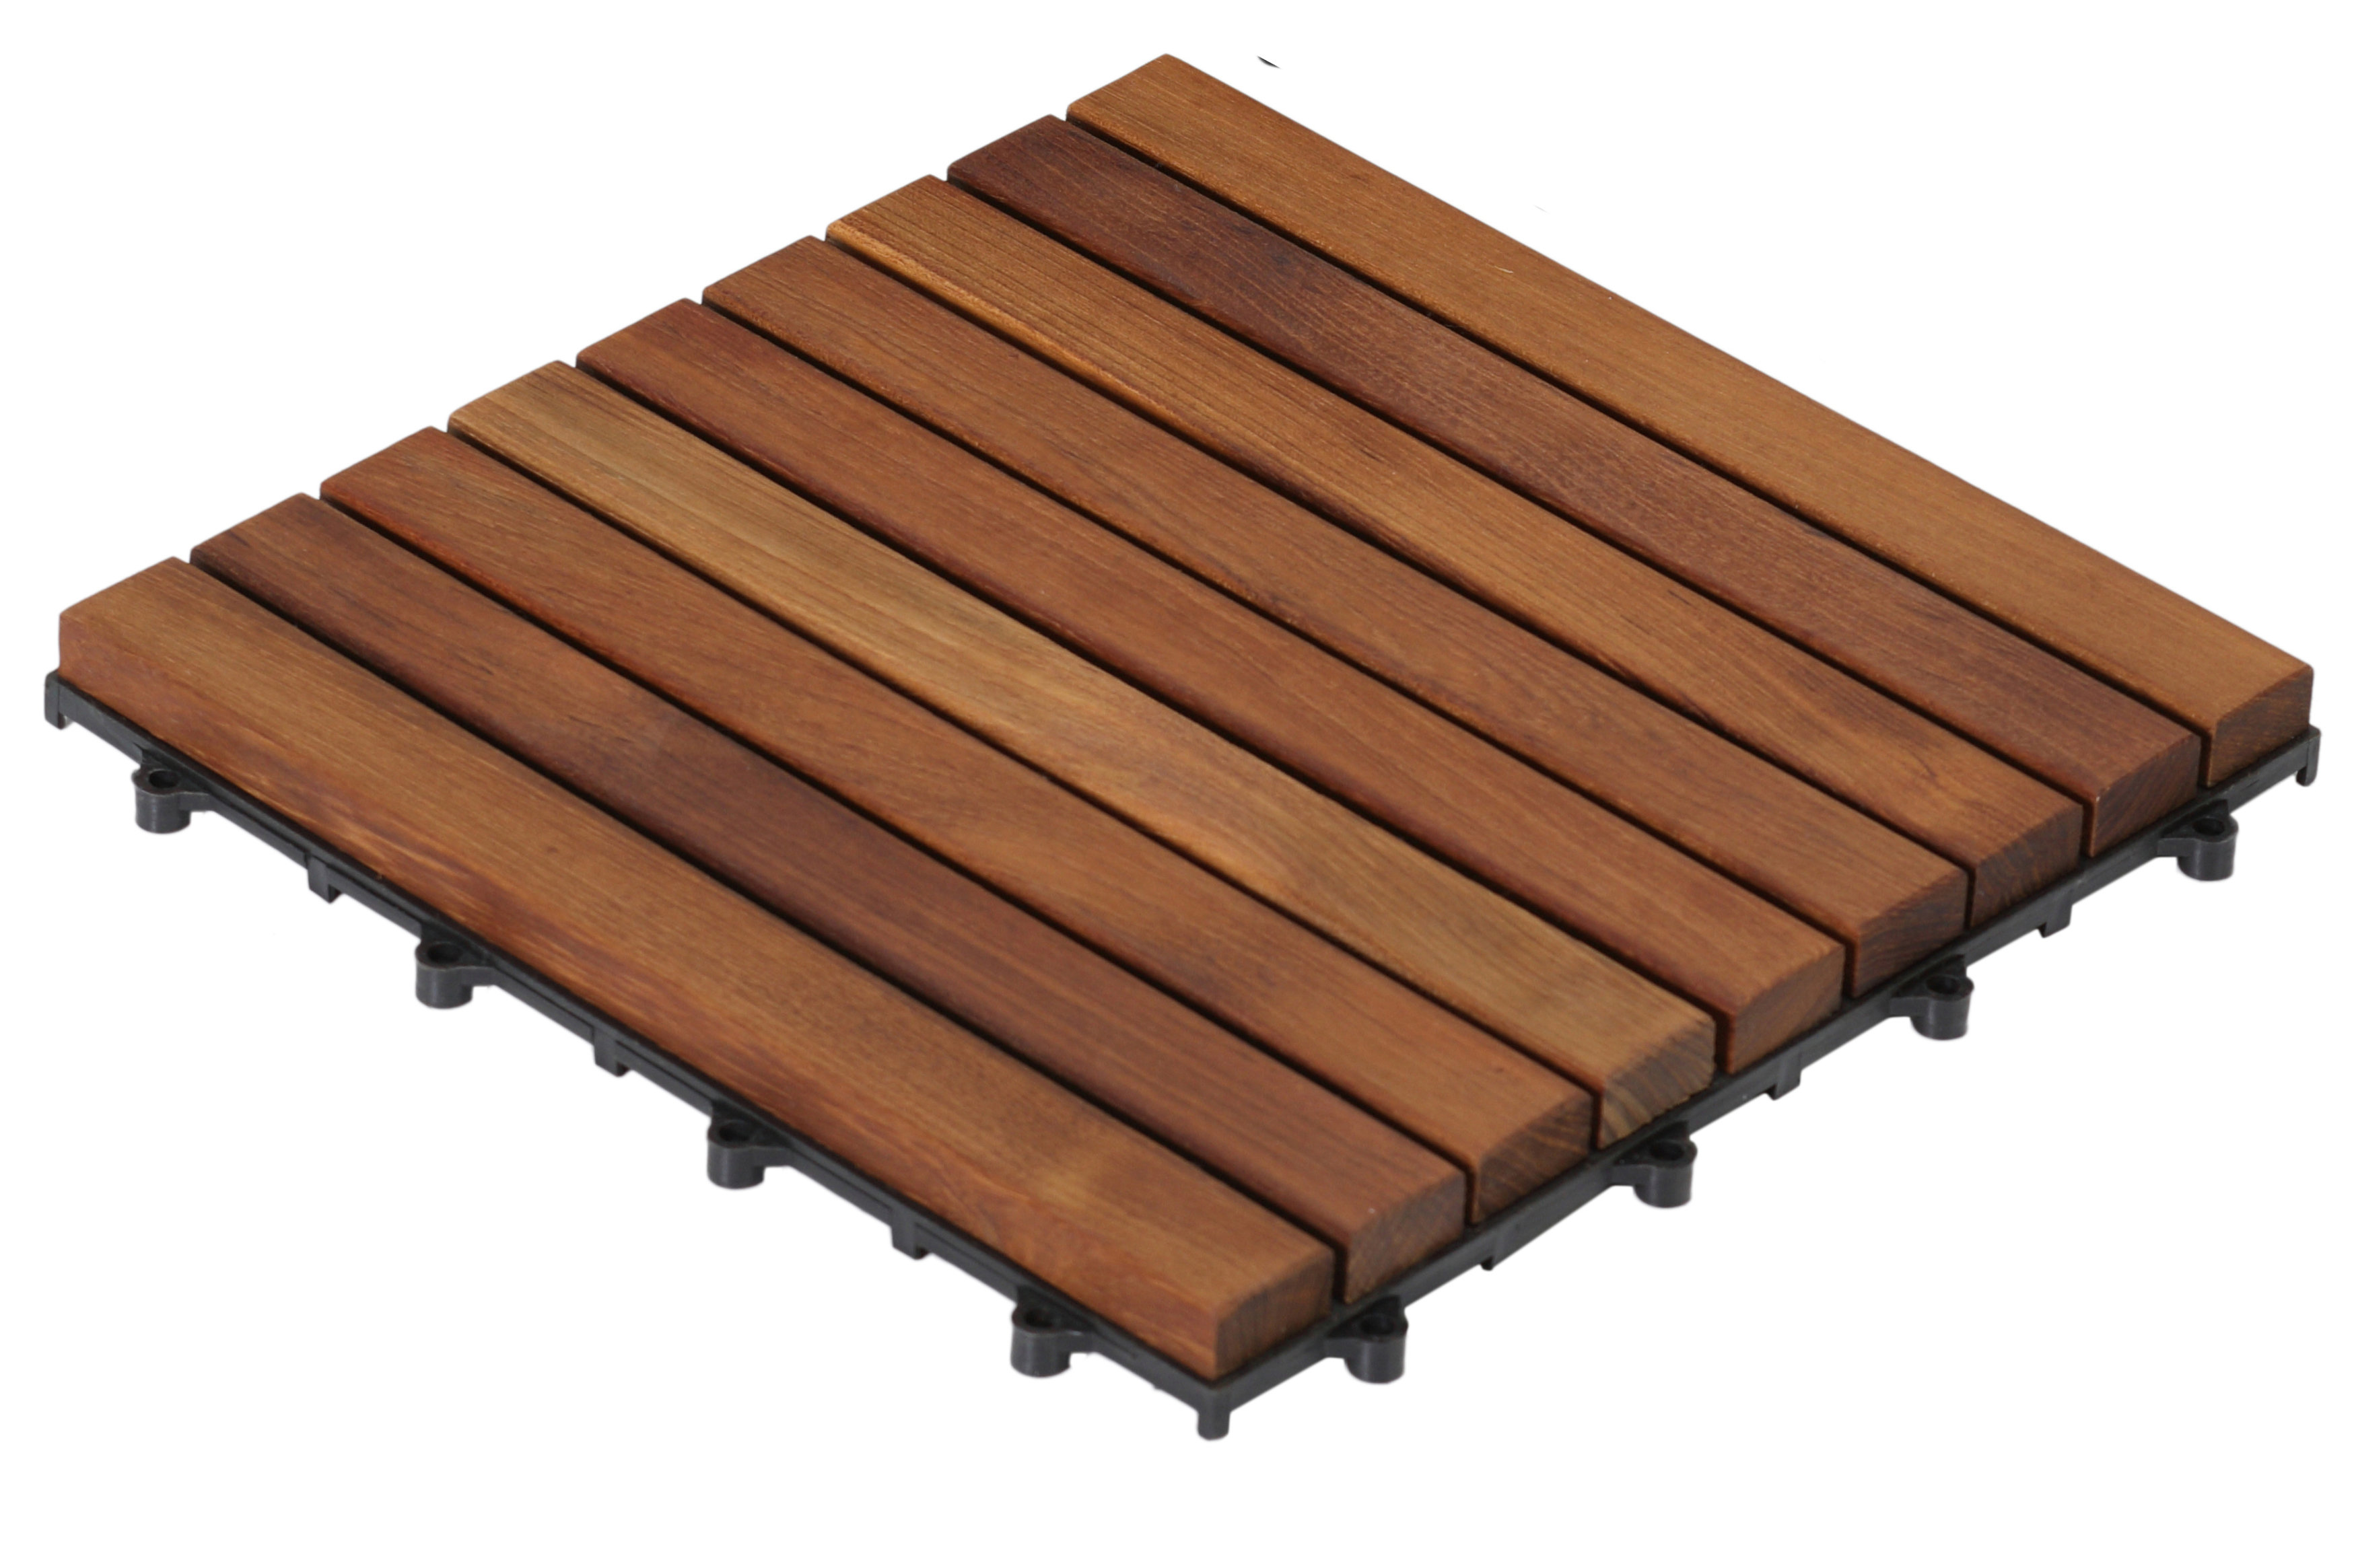 BareDecor EZ-Floor 12 x 12 Teak Wood Snap-In Deck Tiles in Oiled &  Reviews